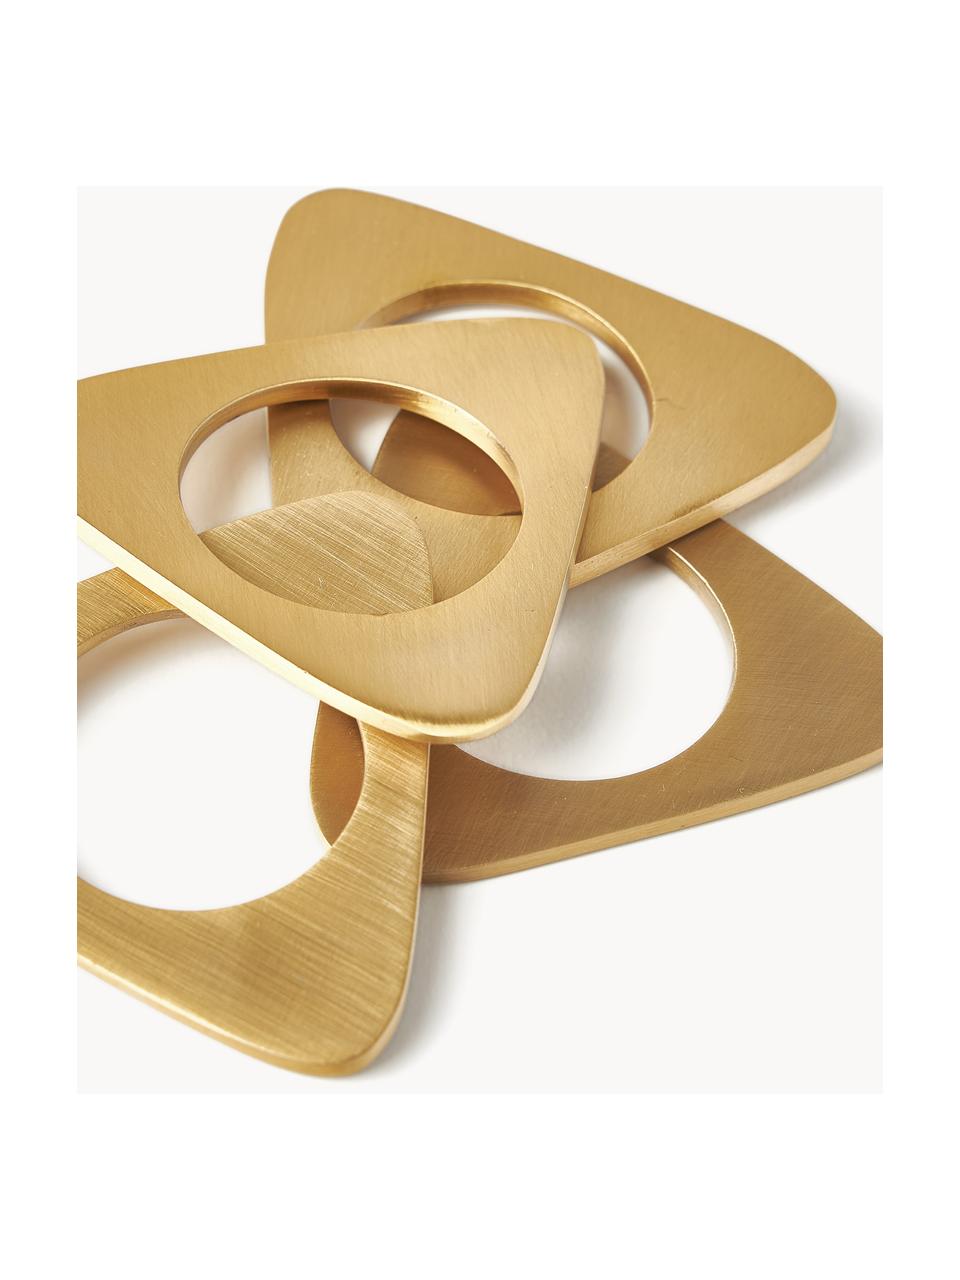 Serviettenringe Triangle, 4 Stück, Metall, beschichtet, Goldfarben, B 7 x H 4 cm